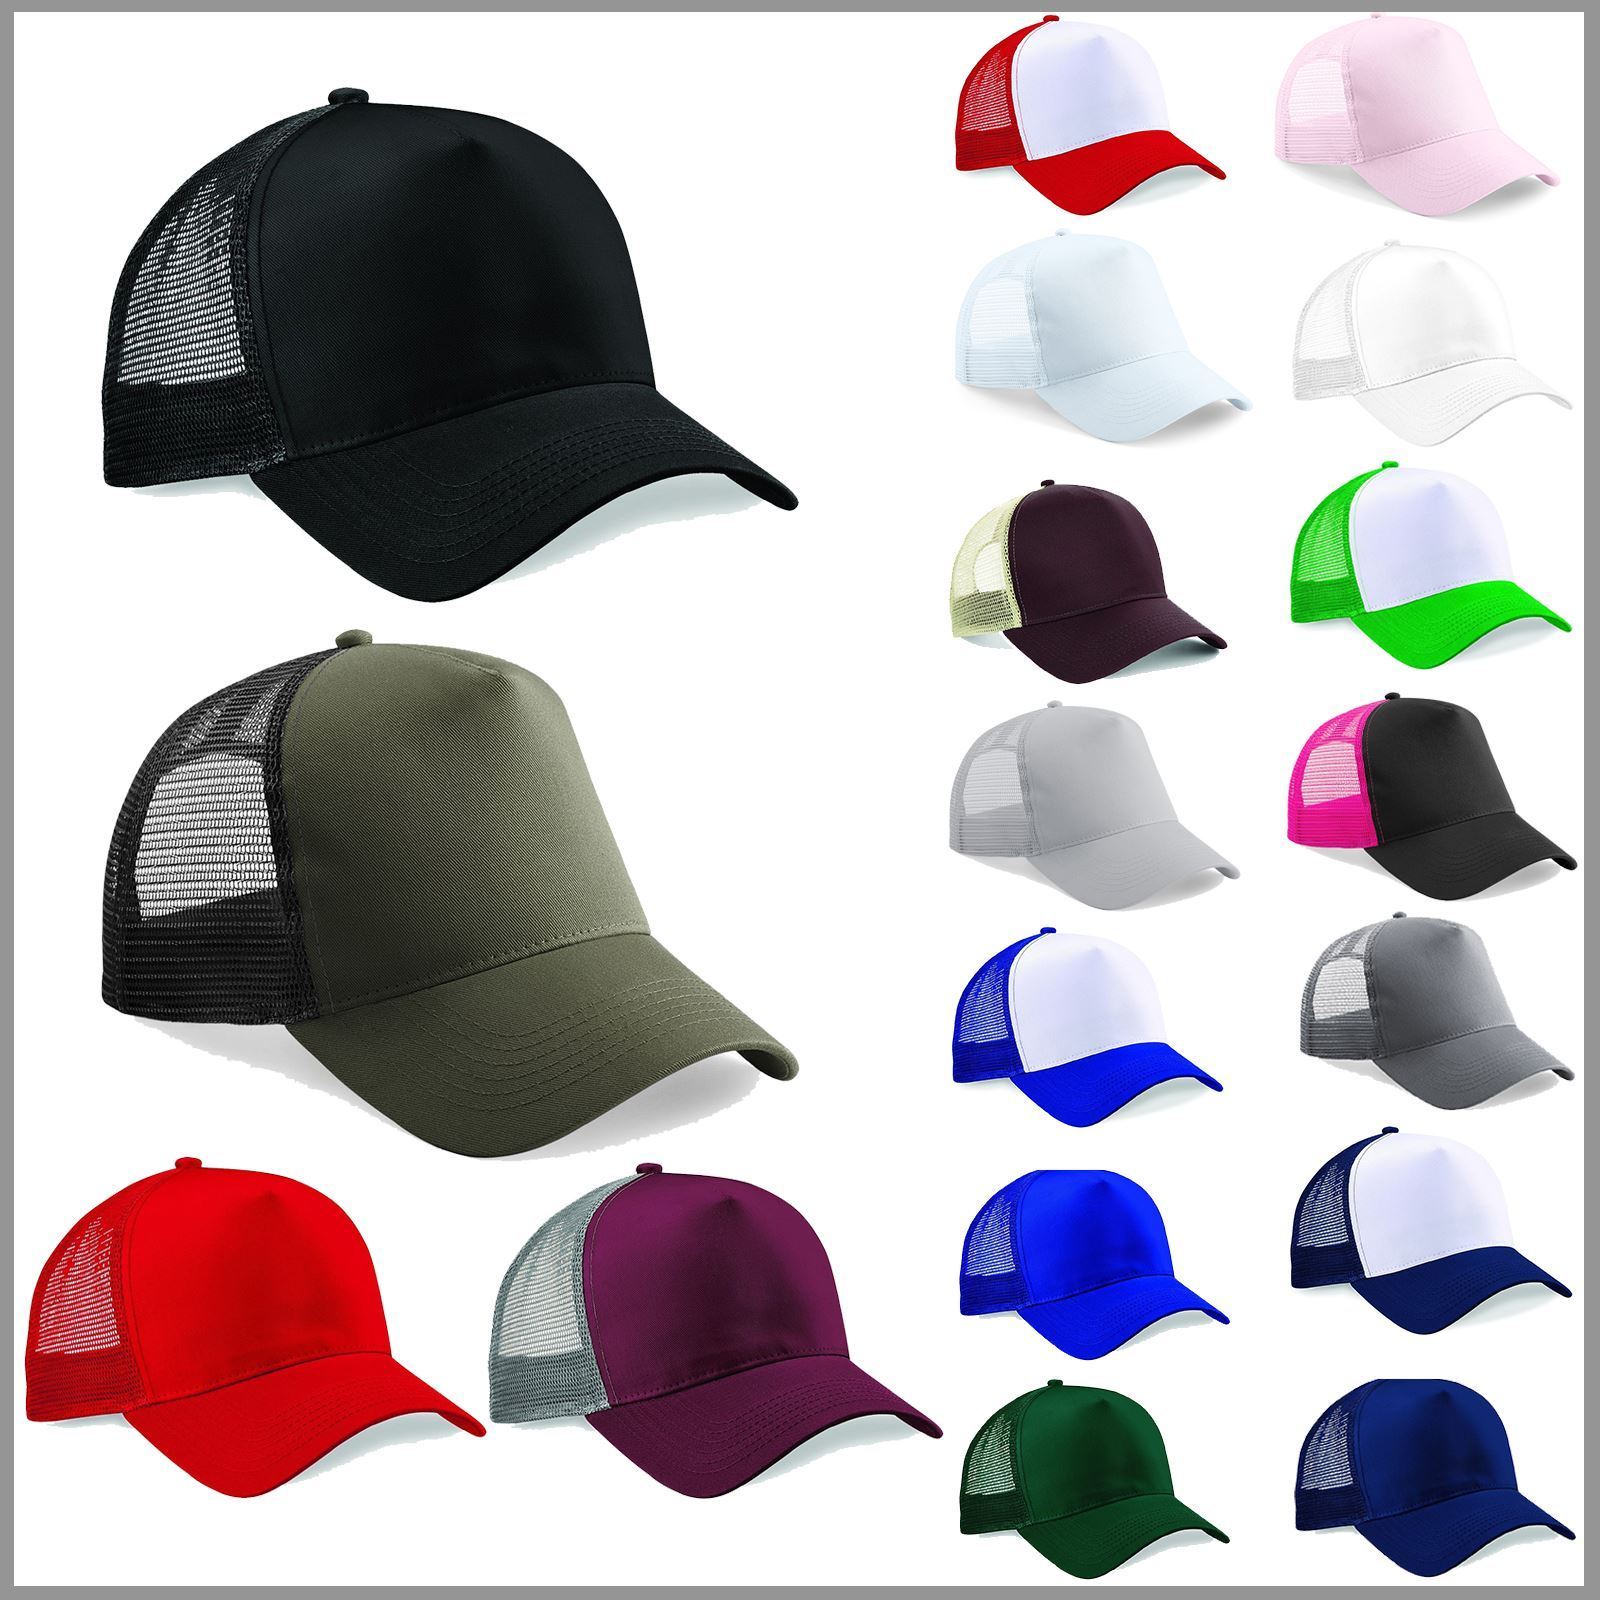 Promotion sport caps,advertising caps,customized baseball caps